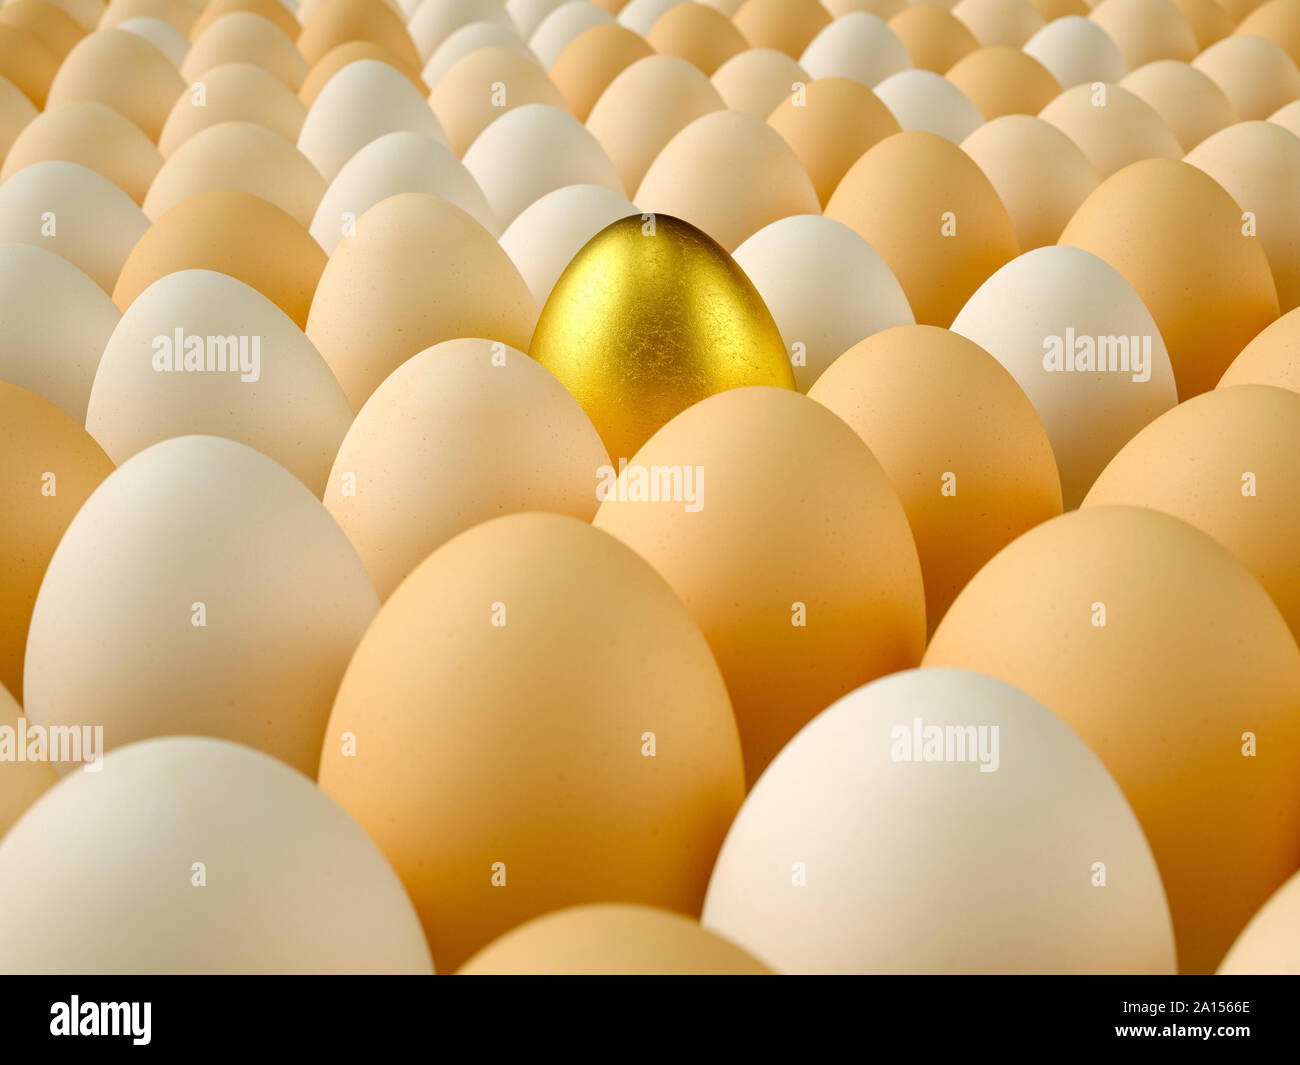 Golden egg amongst a large group of eggs Stock Photo